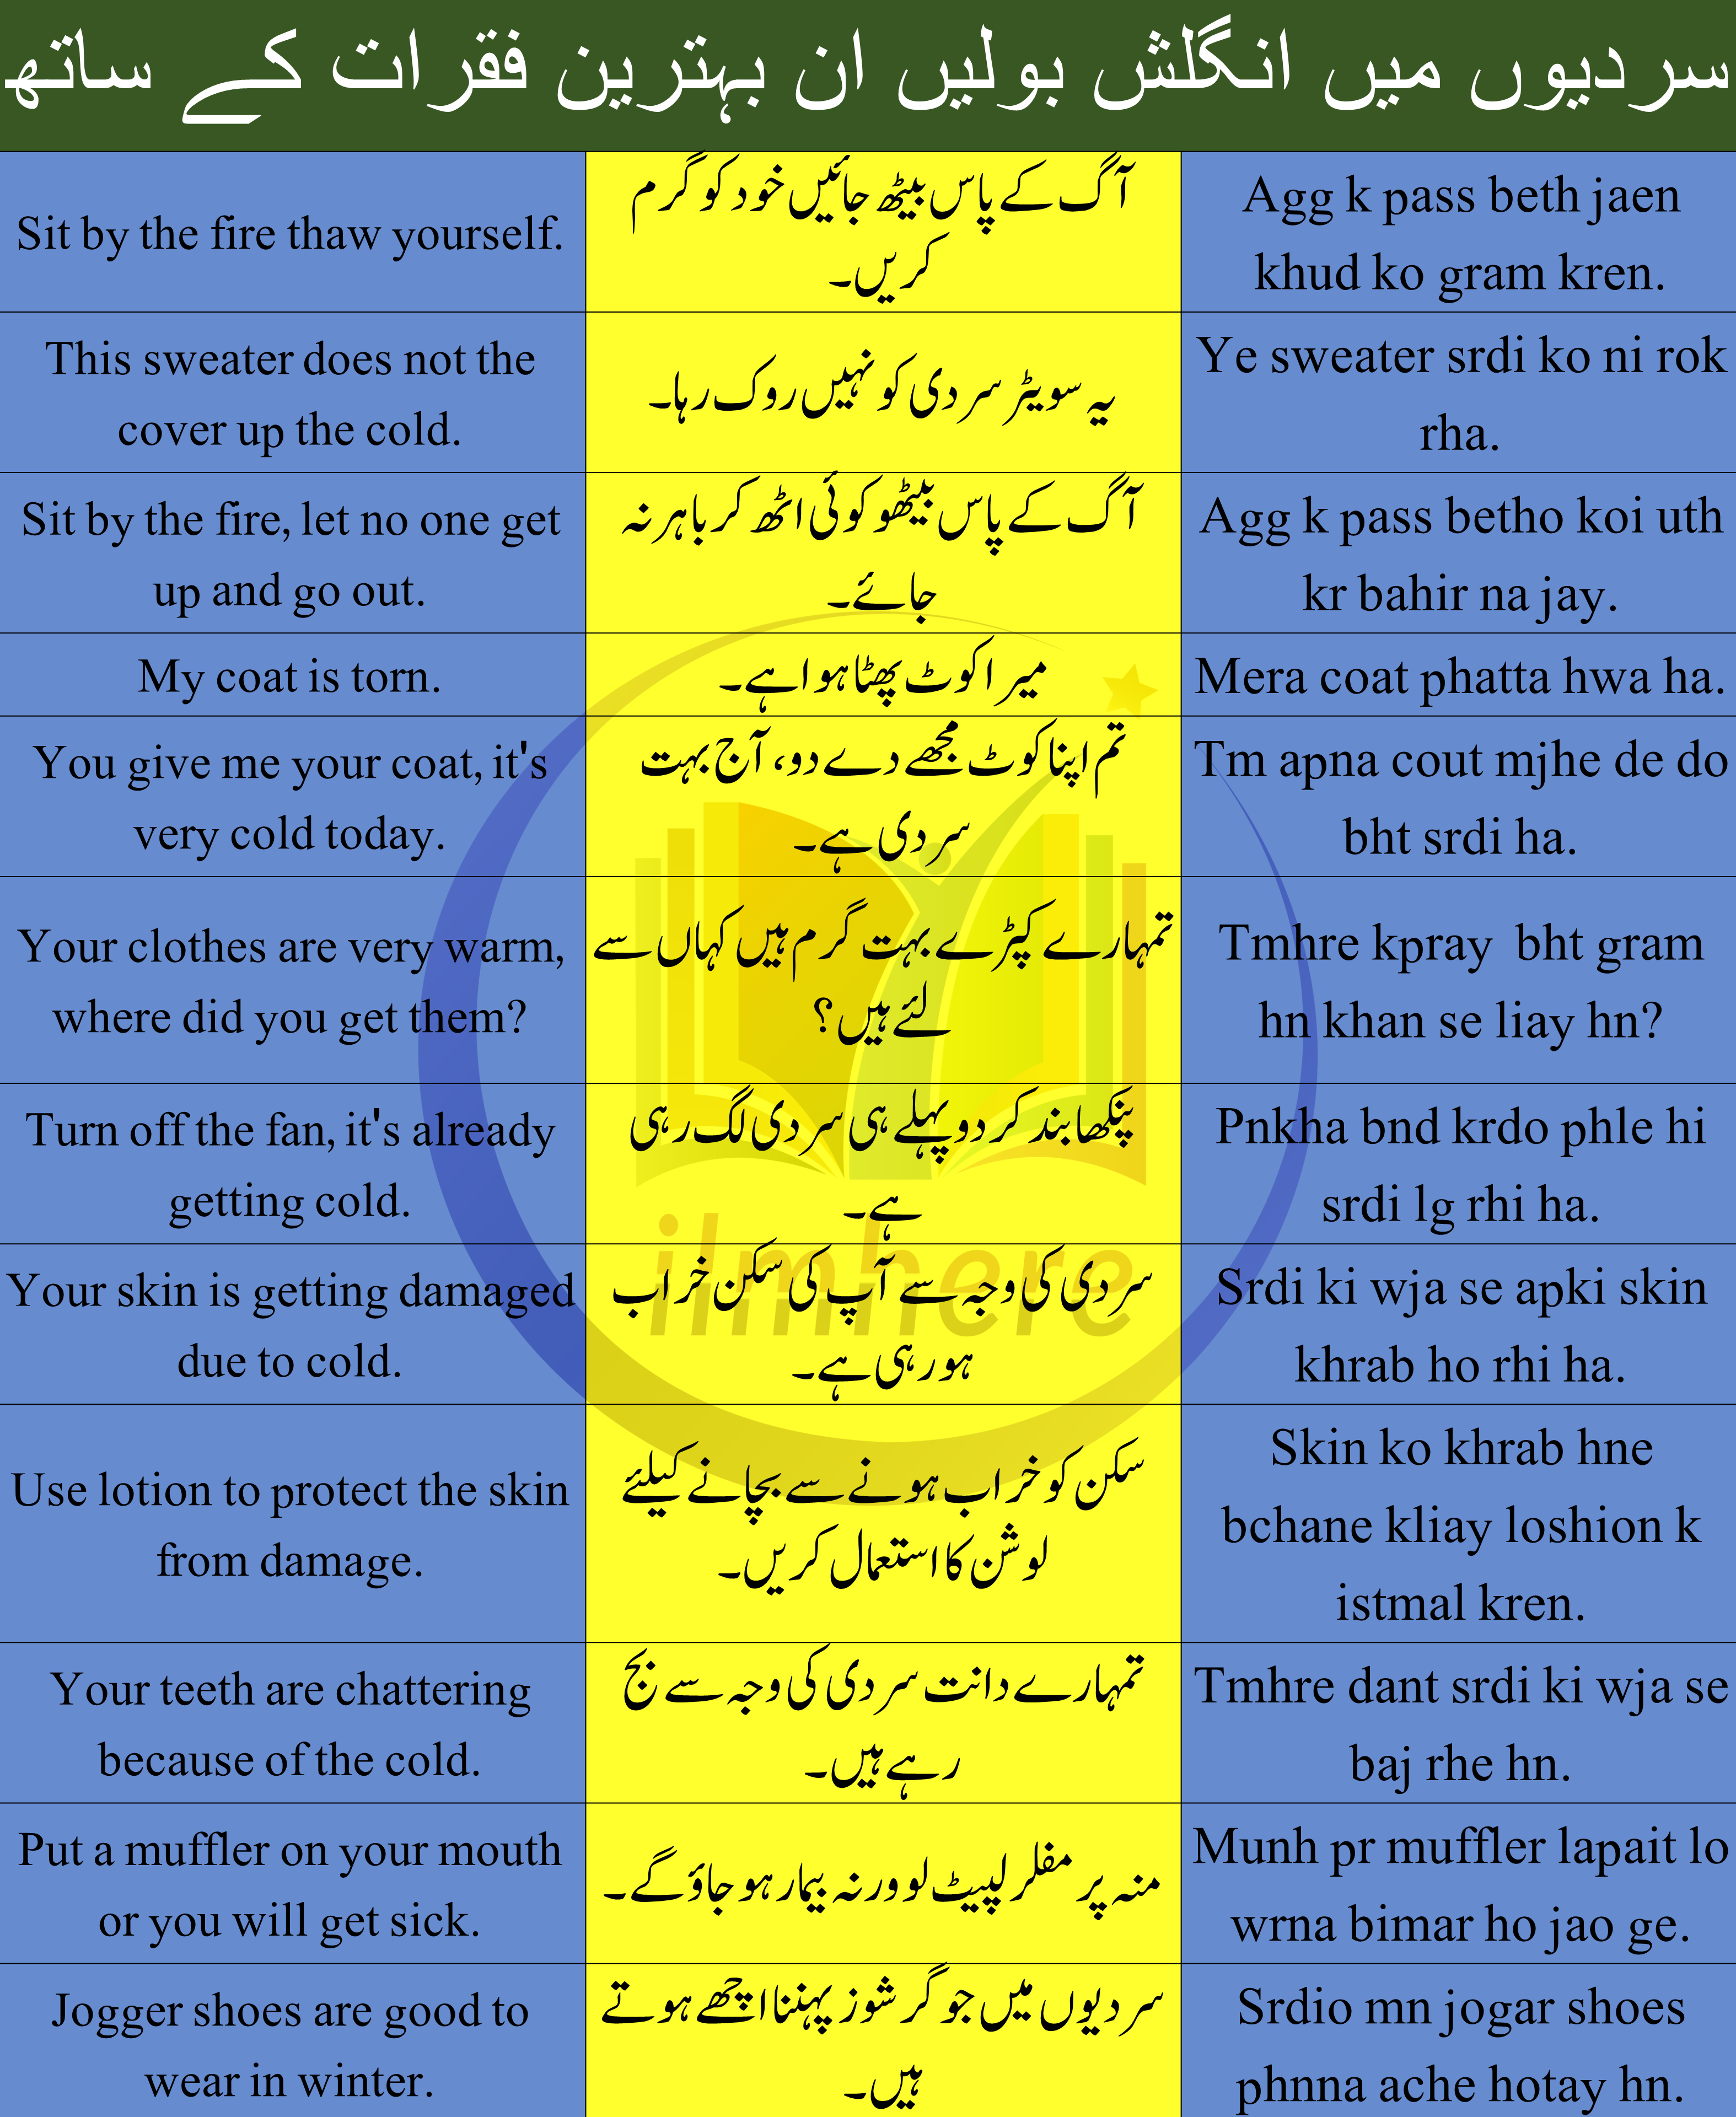 List 4 - English To Urdu Sentences For Winter Season